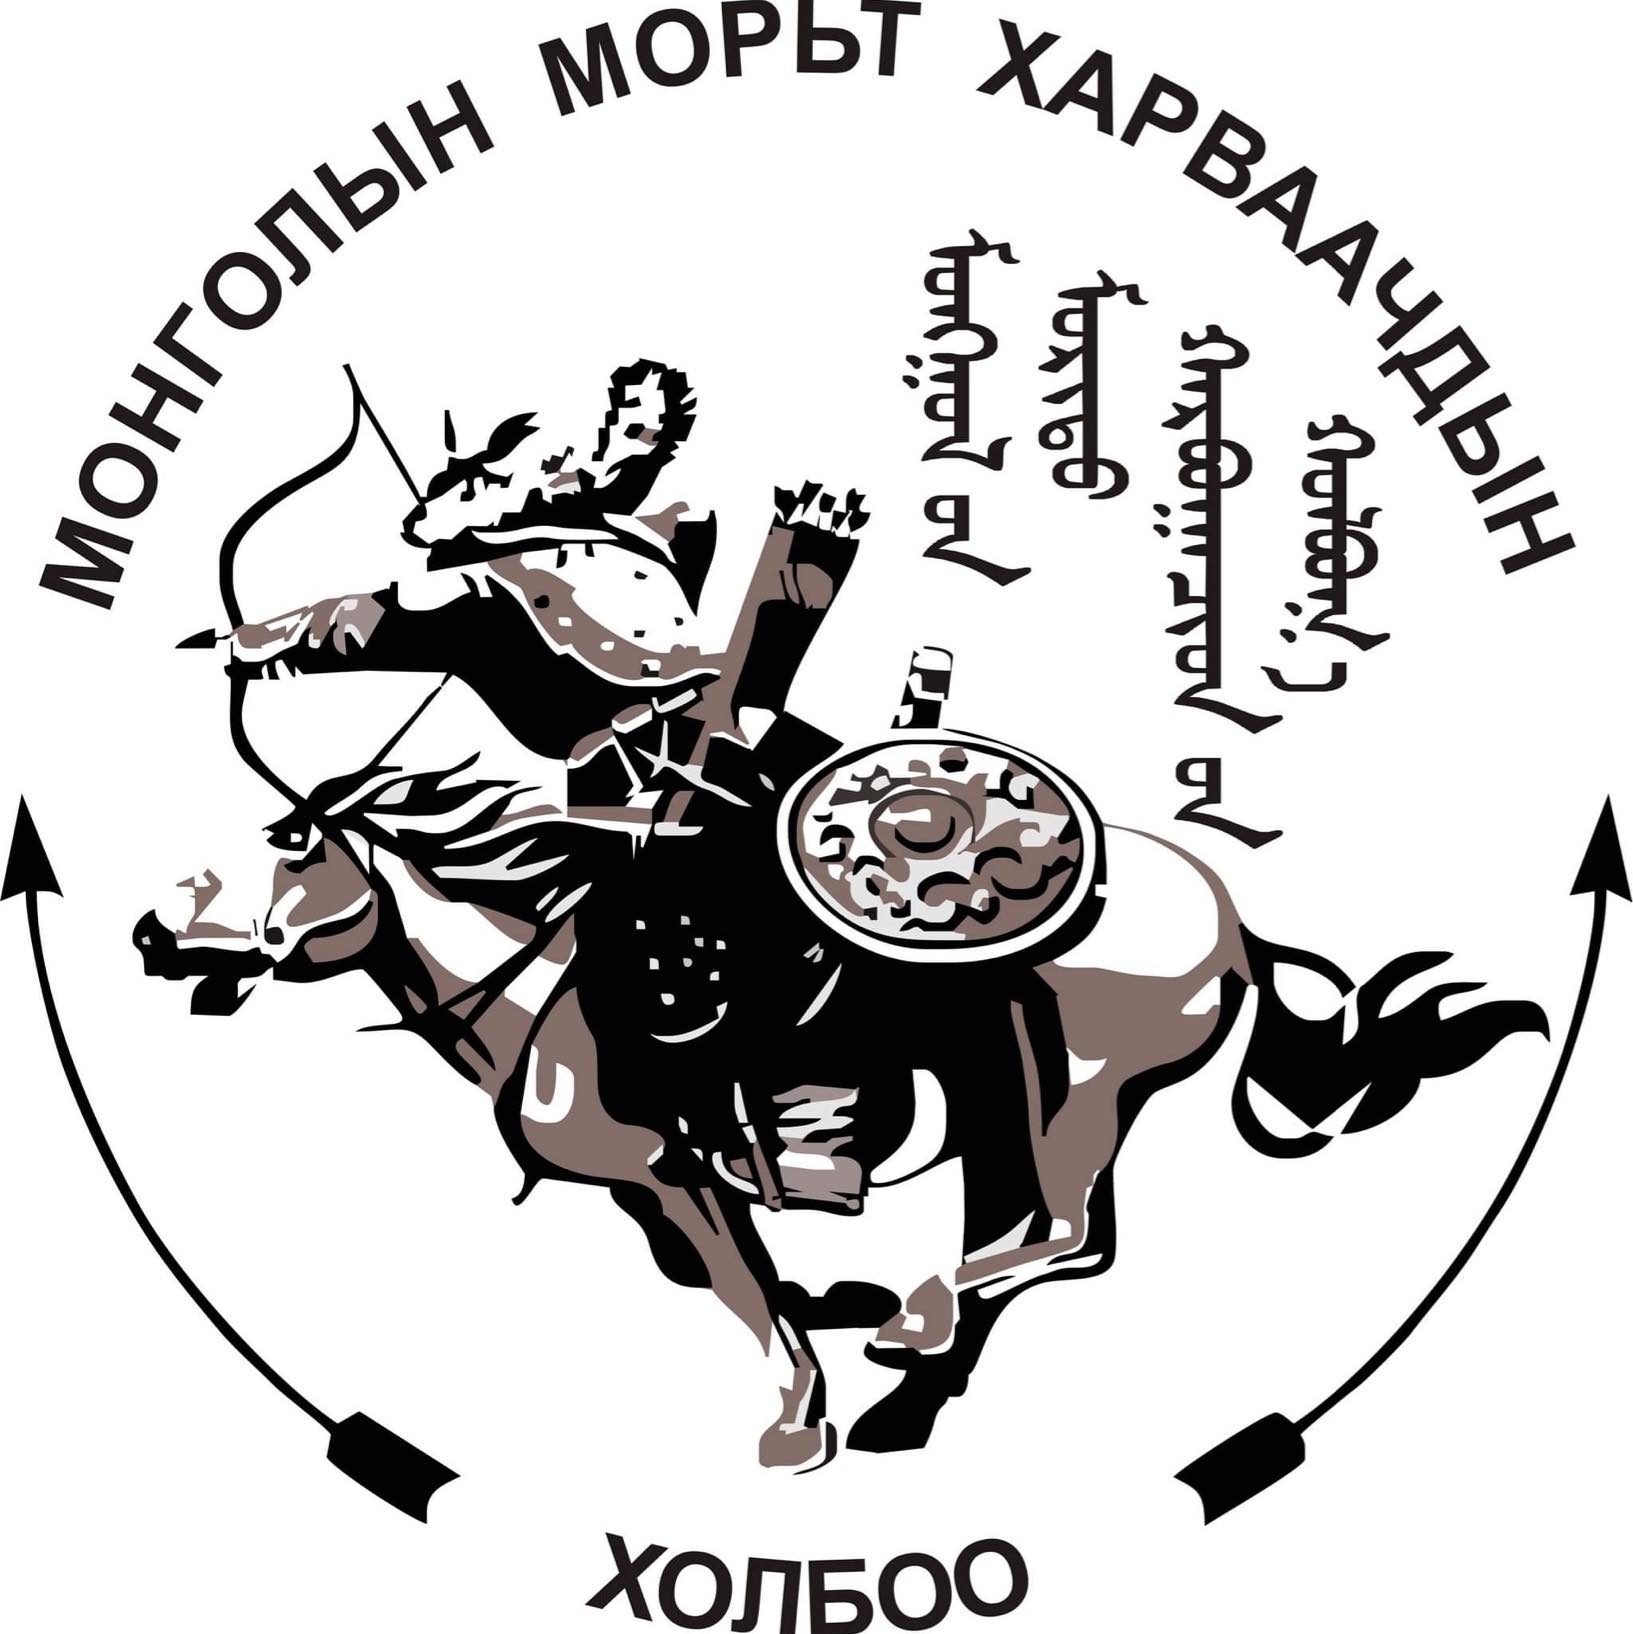 Mongolian Horseback Archers' Association